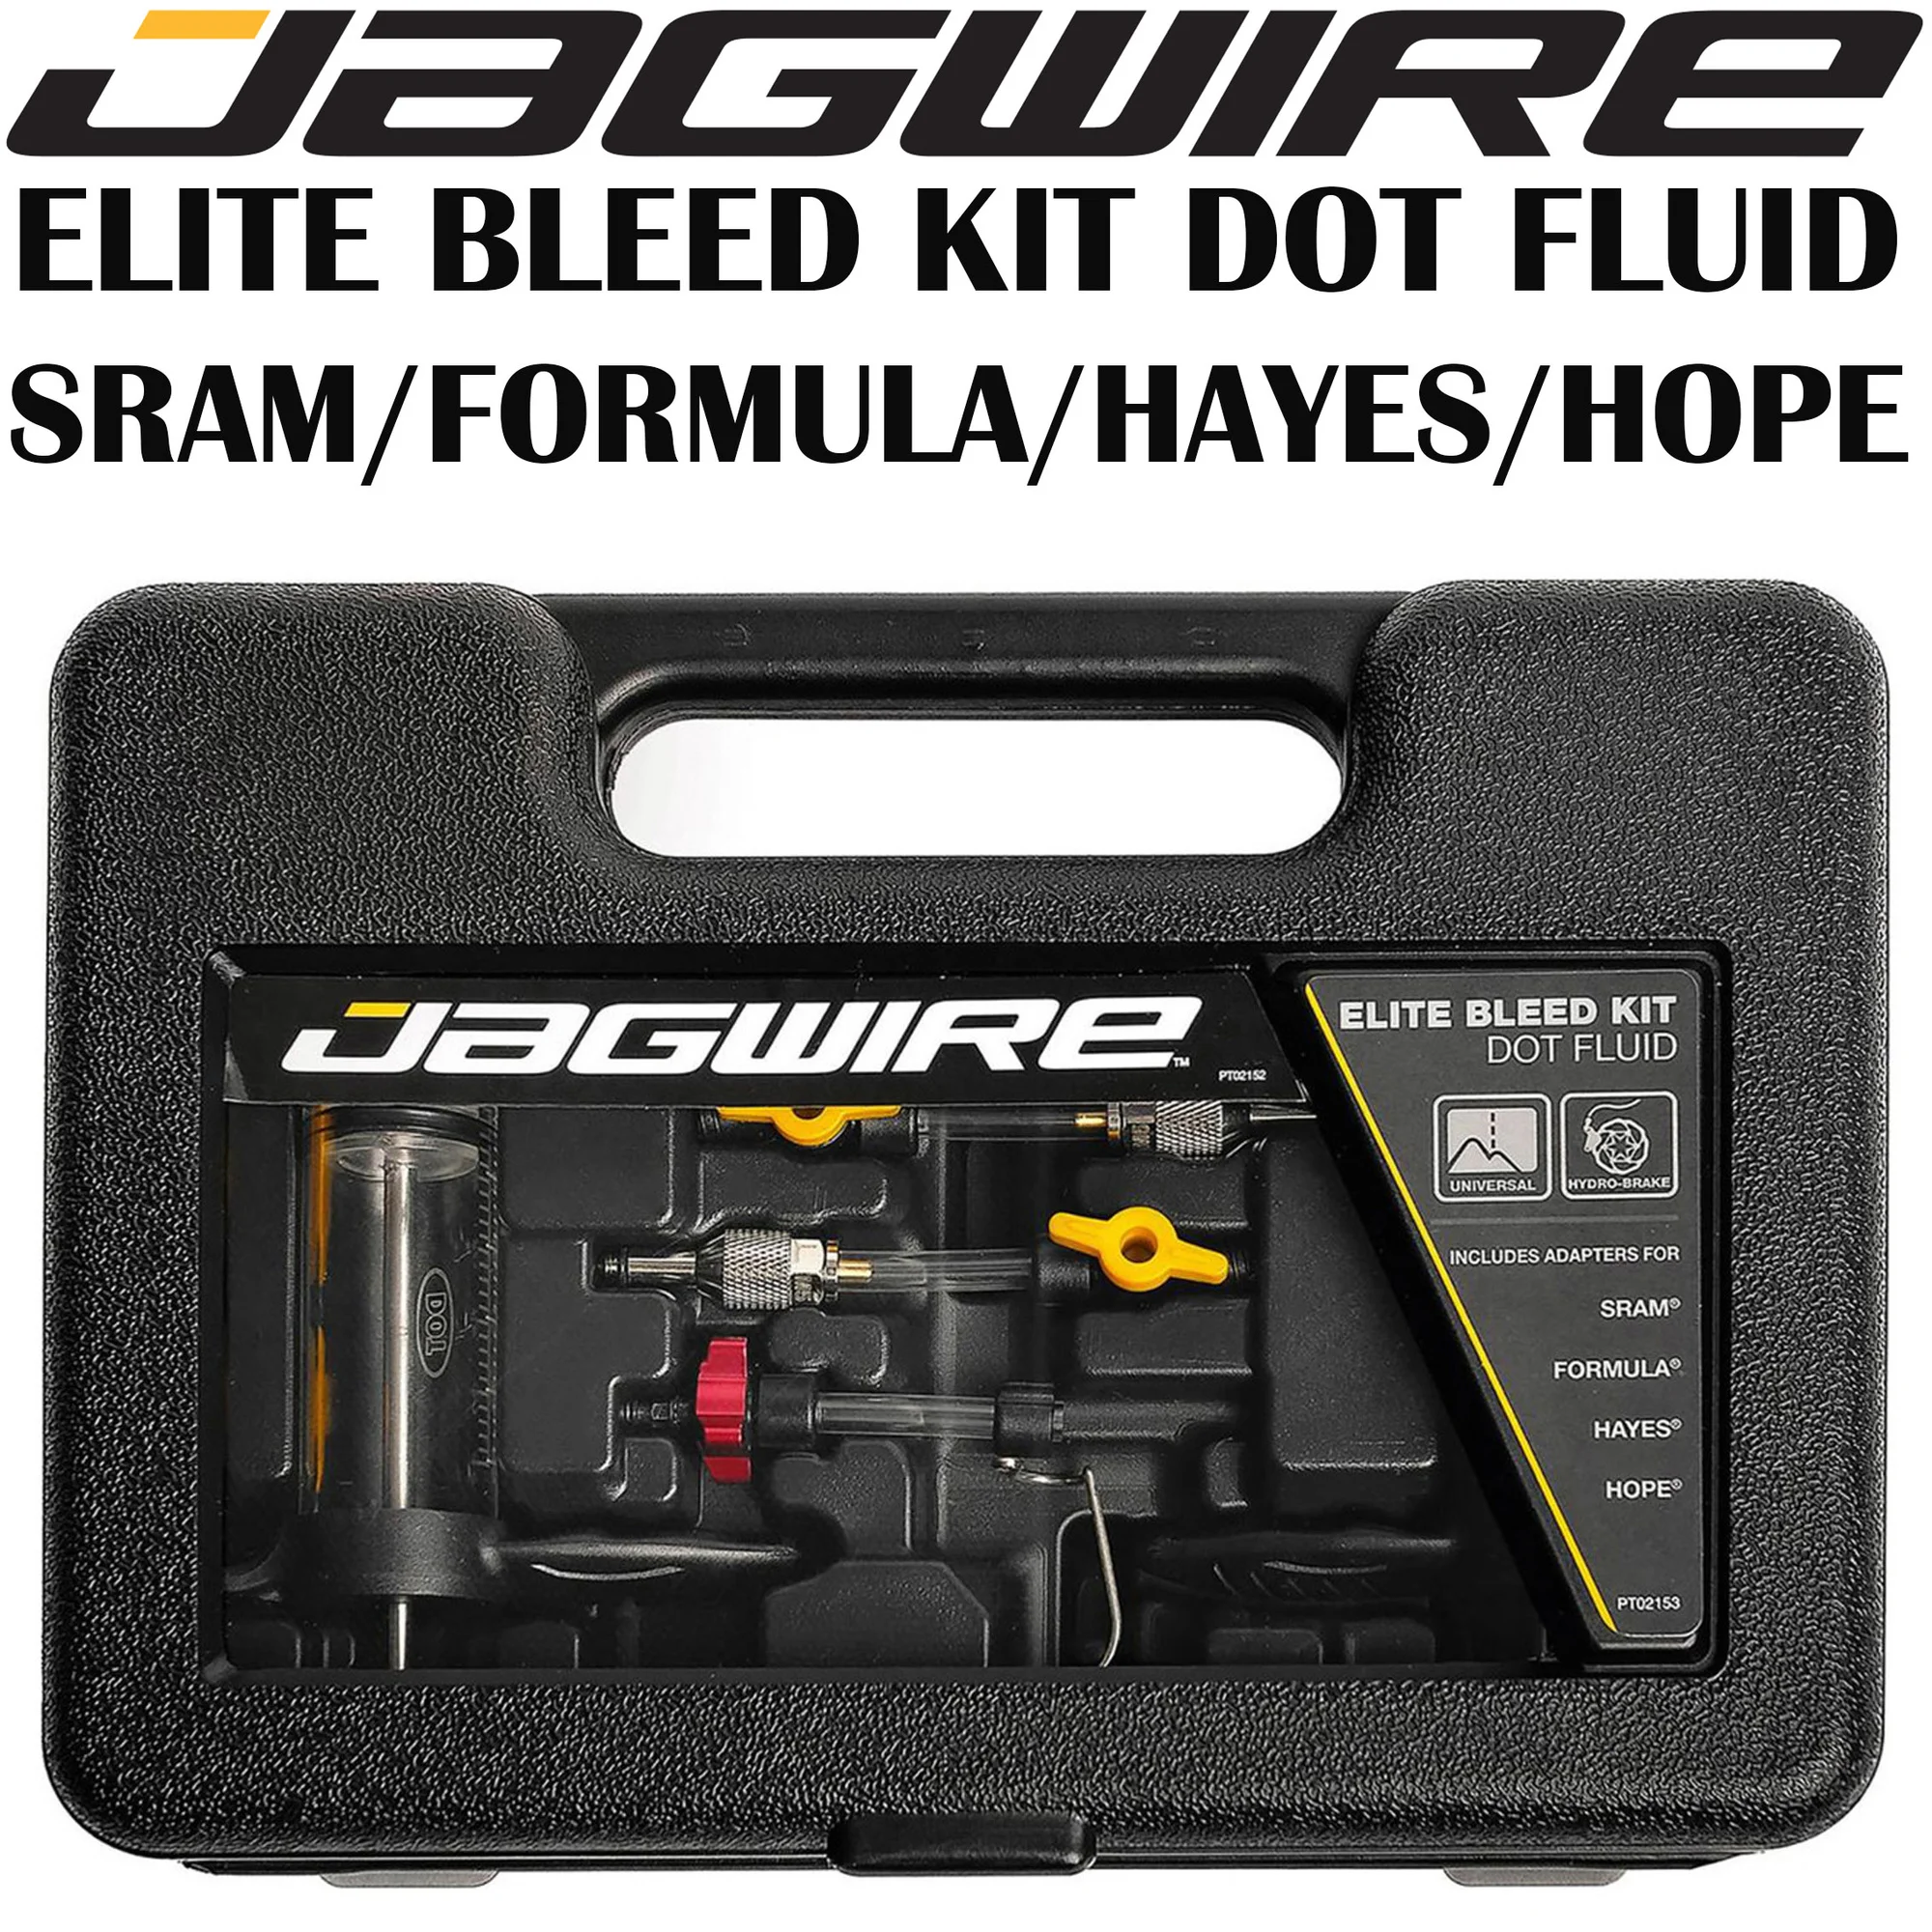 

JAGWIRE Hydraulic disc Brake SRAM FORMULA HAYES HOPE oil filling tools ELITE BLEED KIT DOT FLUID tool